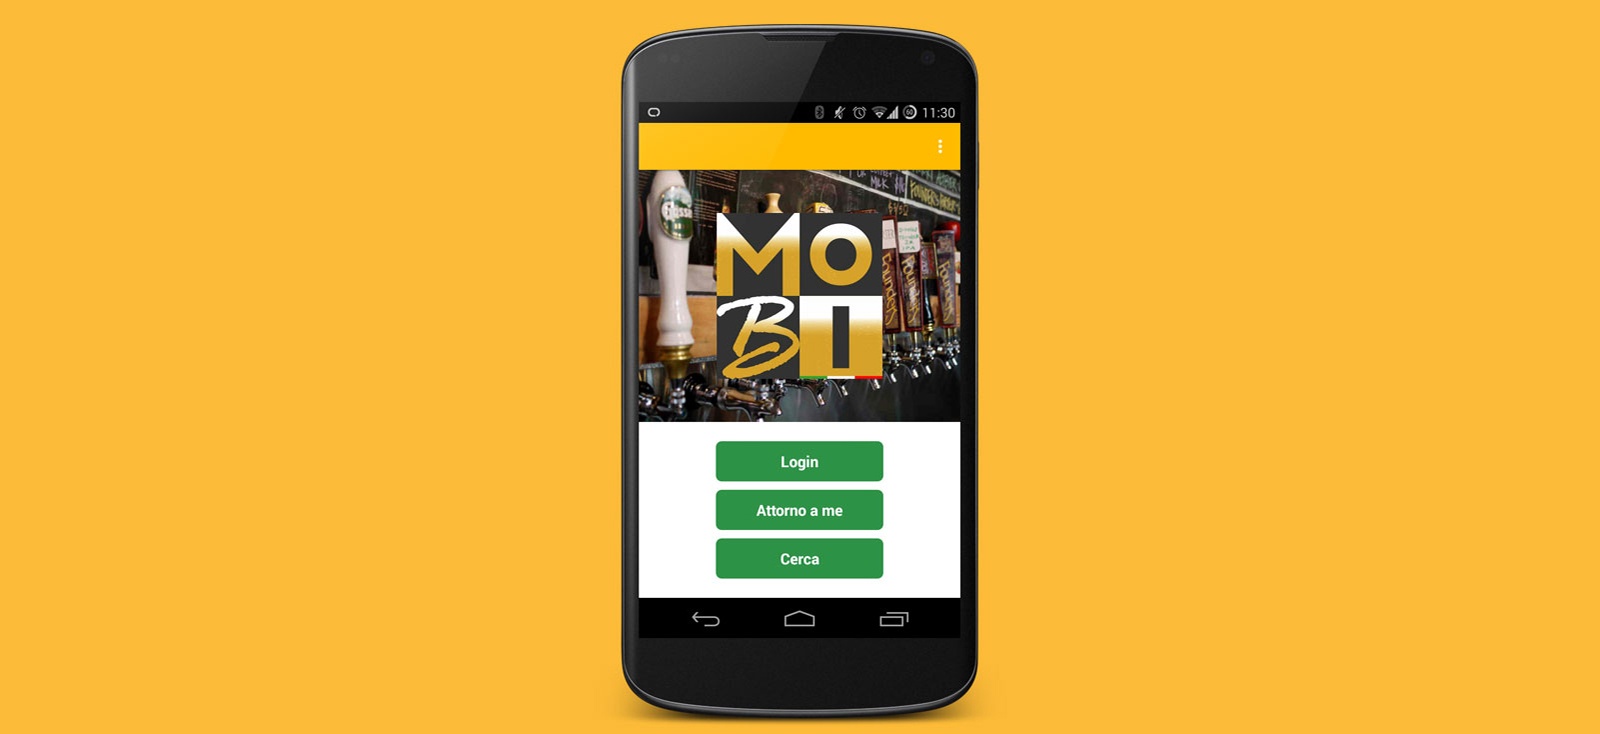 Applicazione MOBI su smartphone